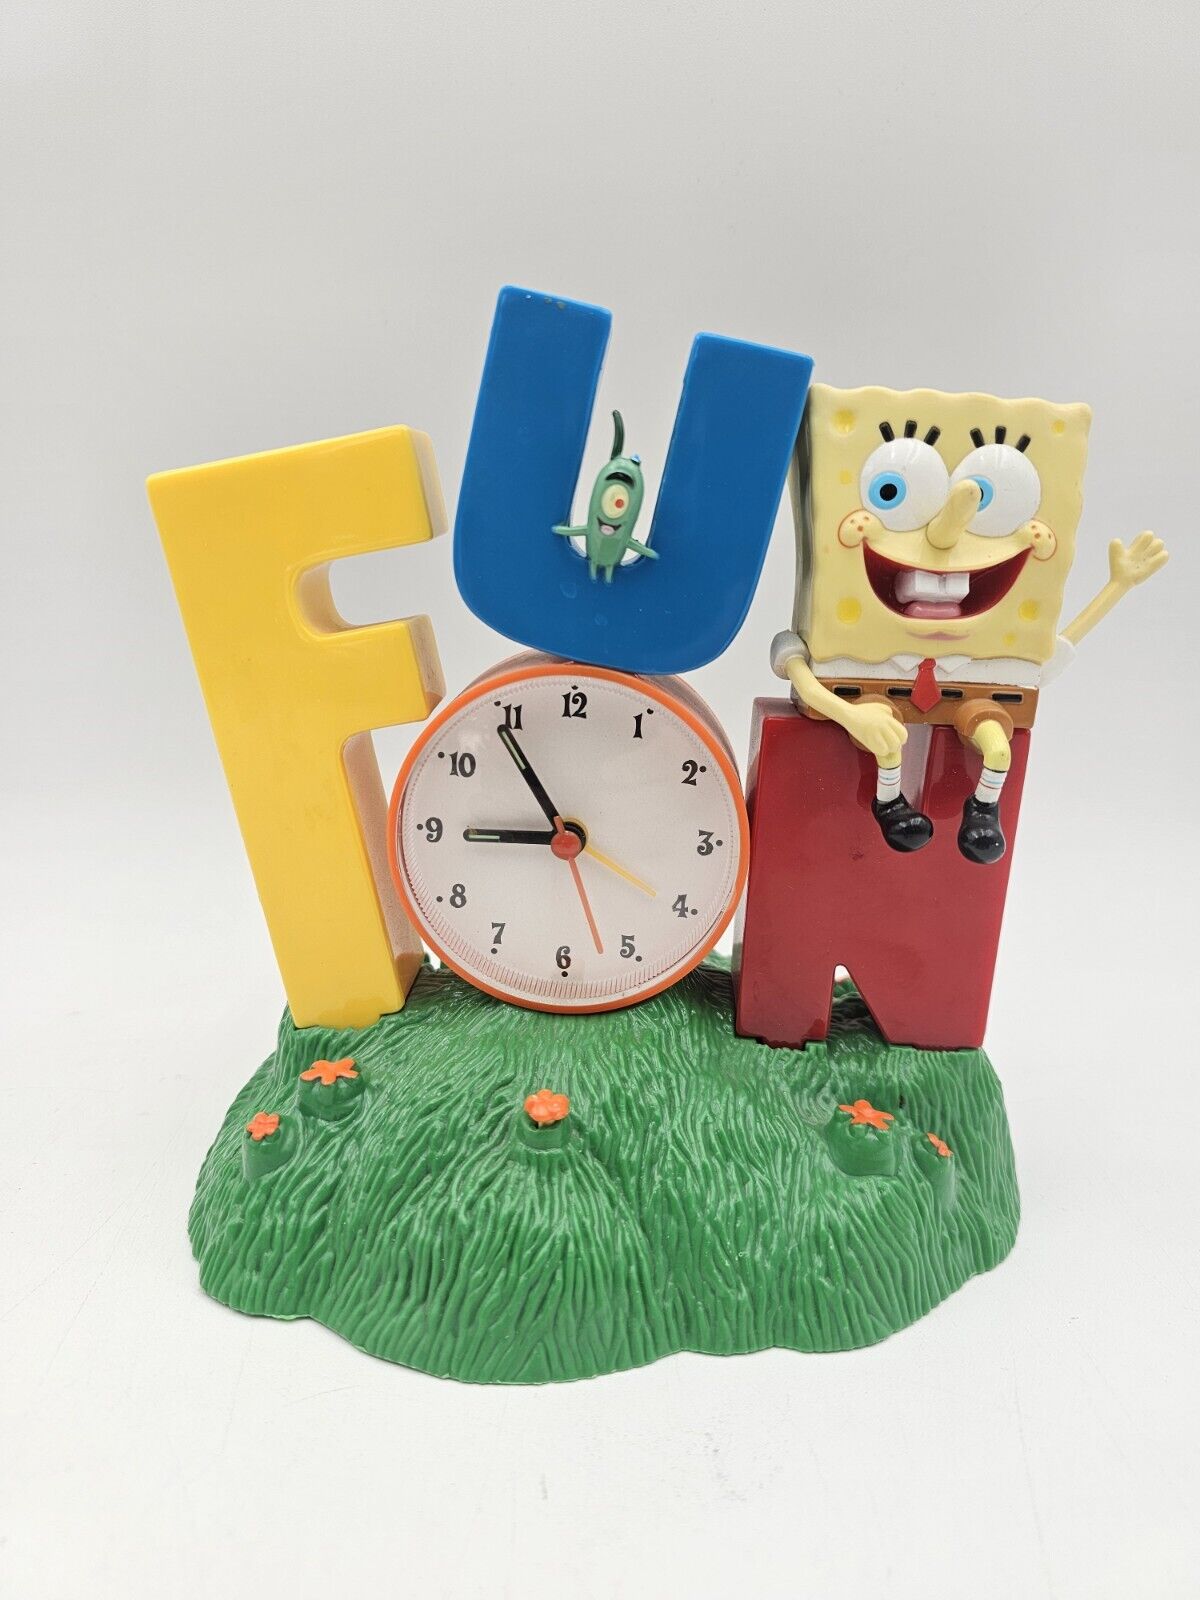 Spongebob Squarepants FUN Singing Alarm Clock 2002 Tested and Working